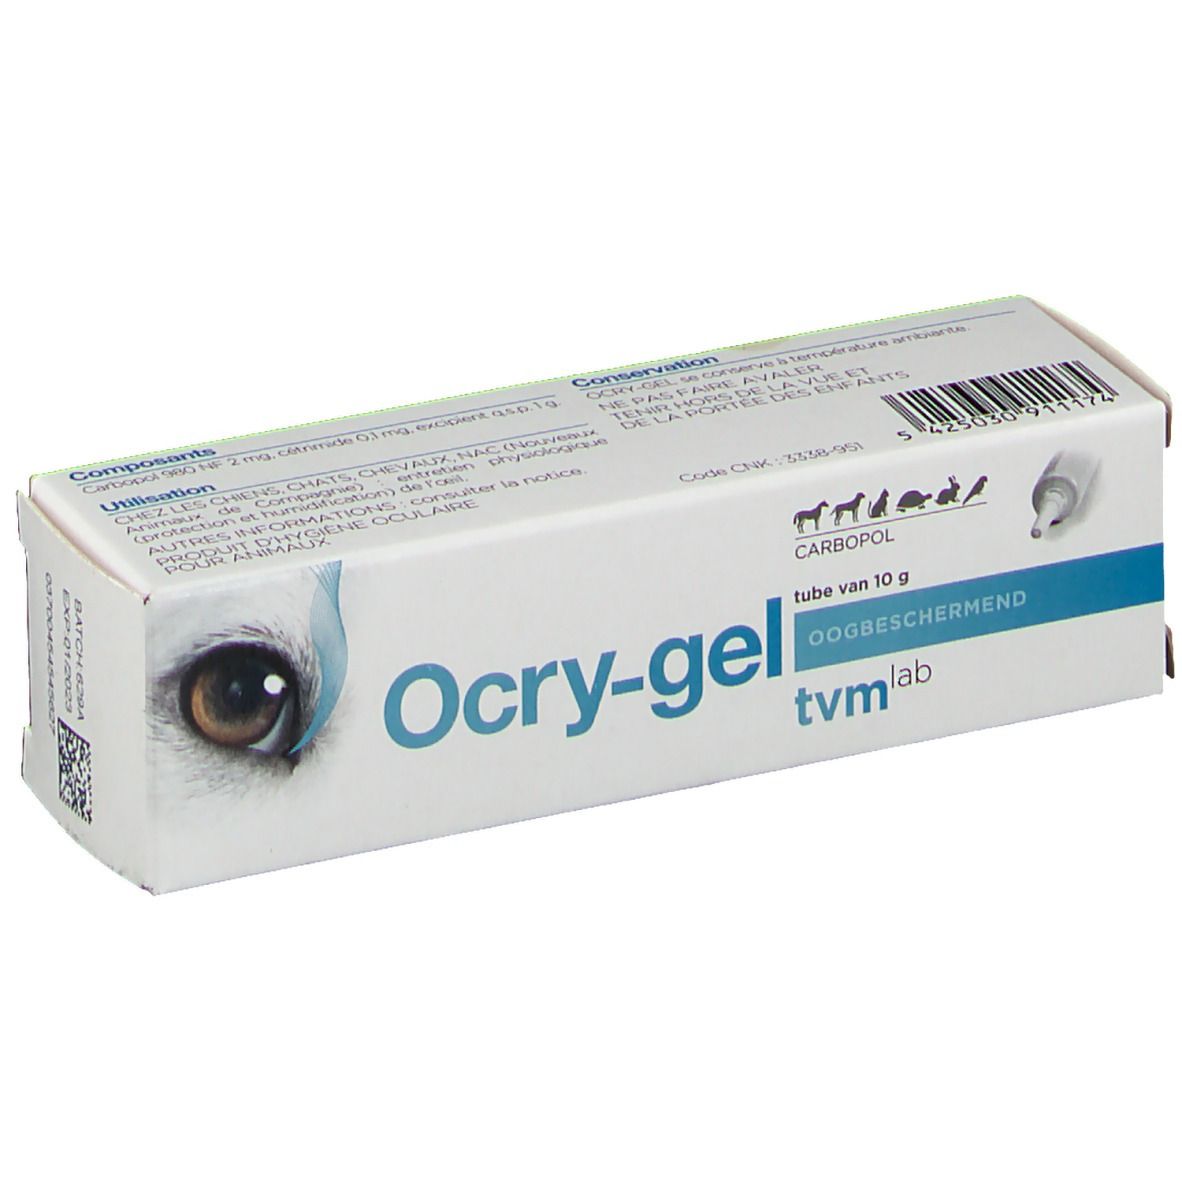 Image of Ocry-gel